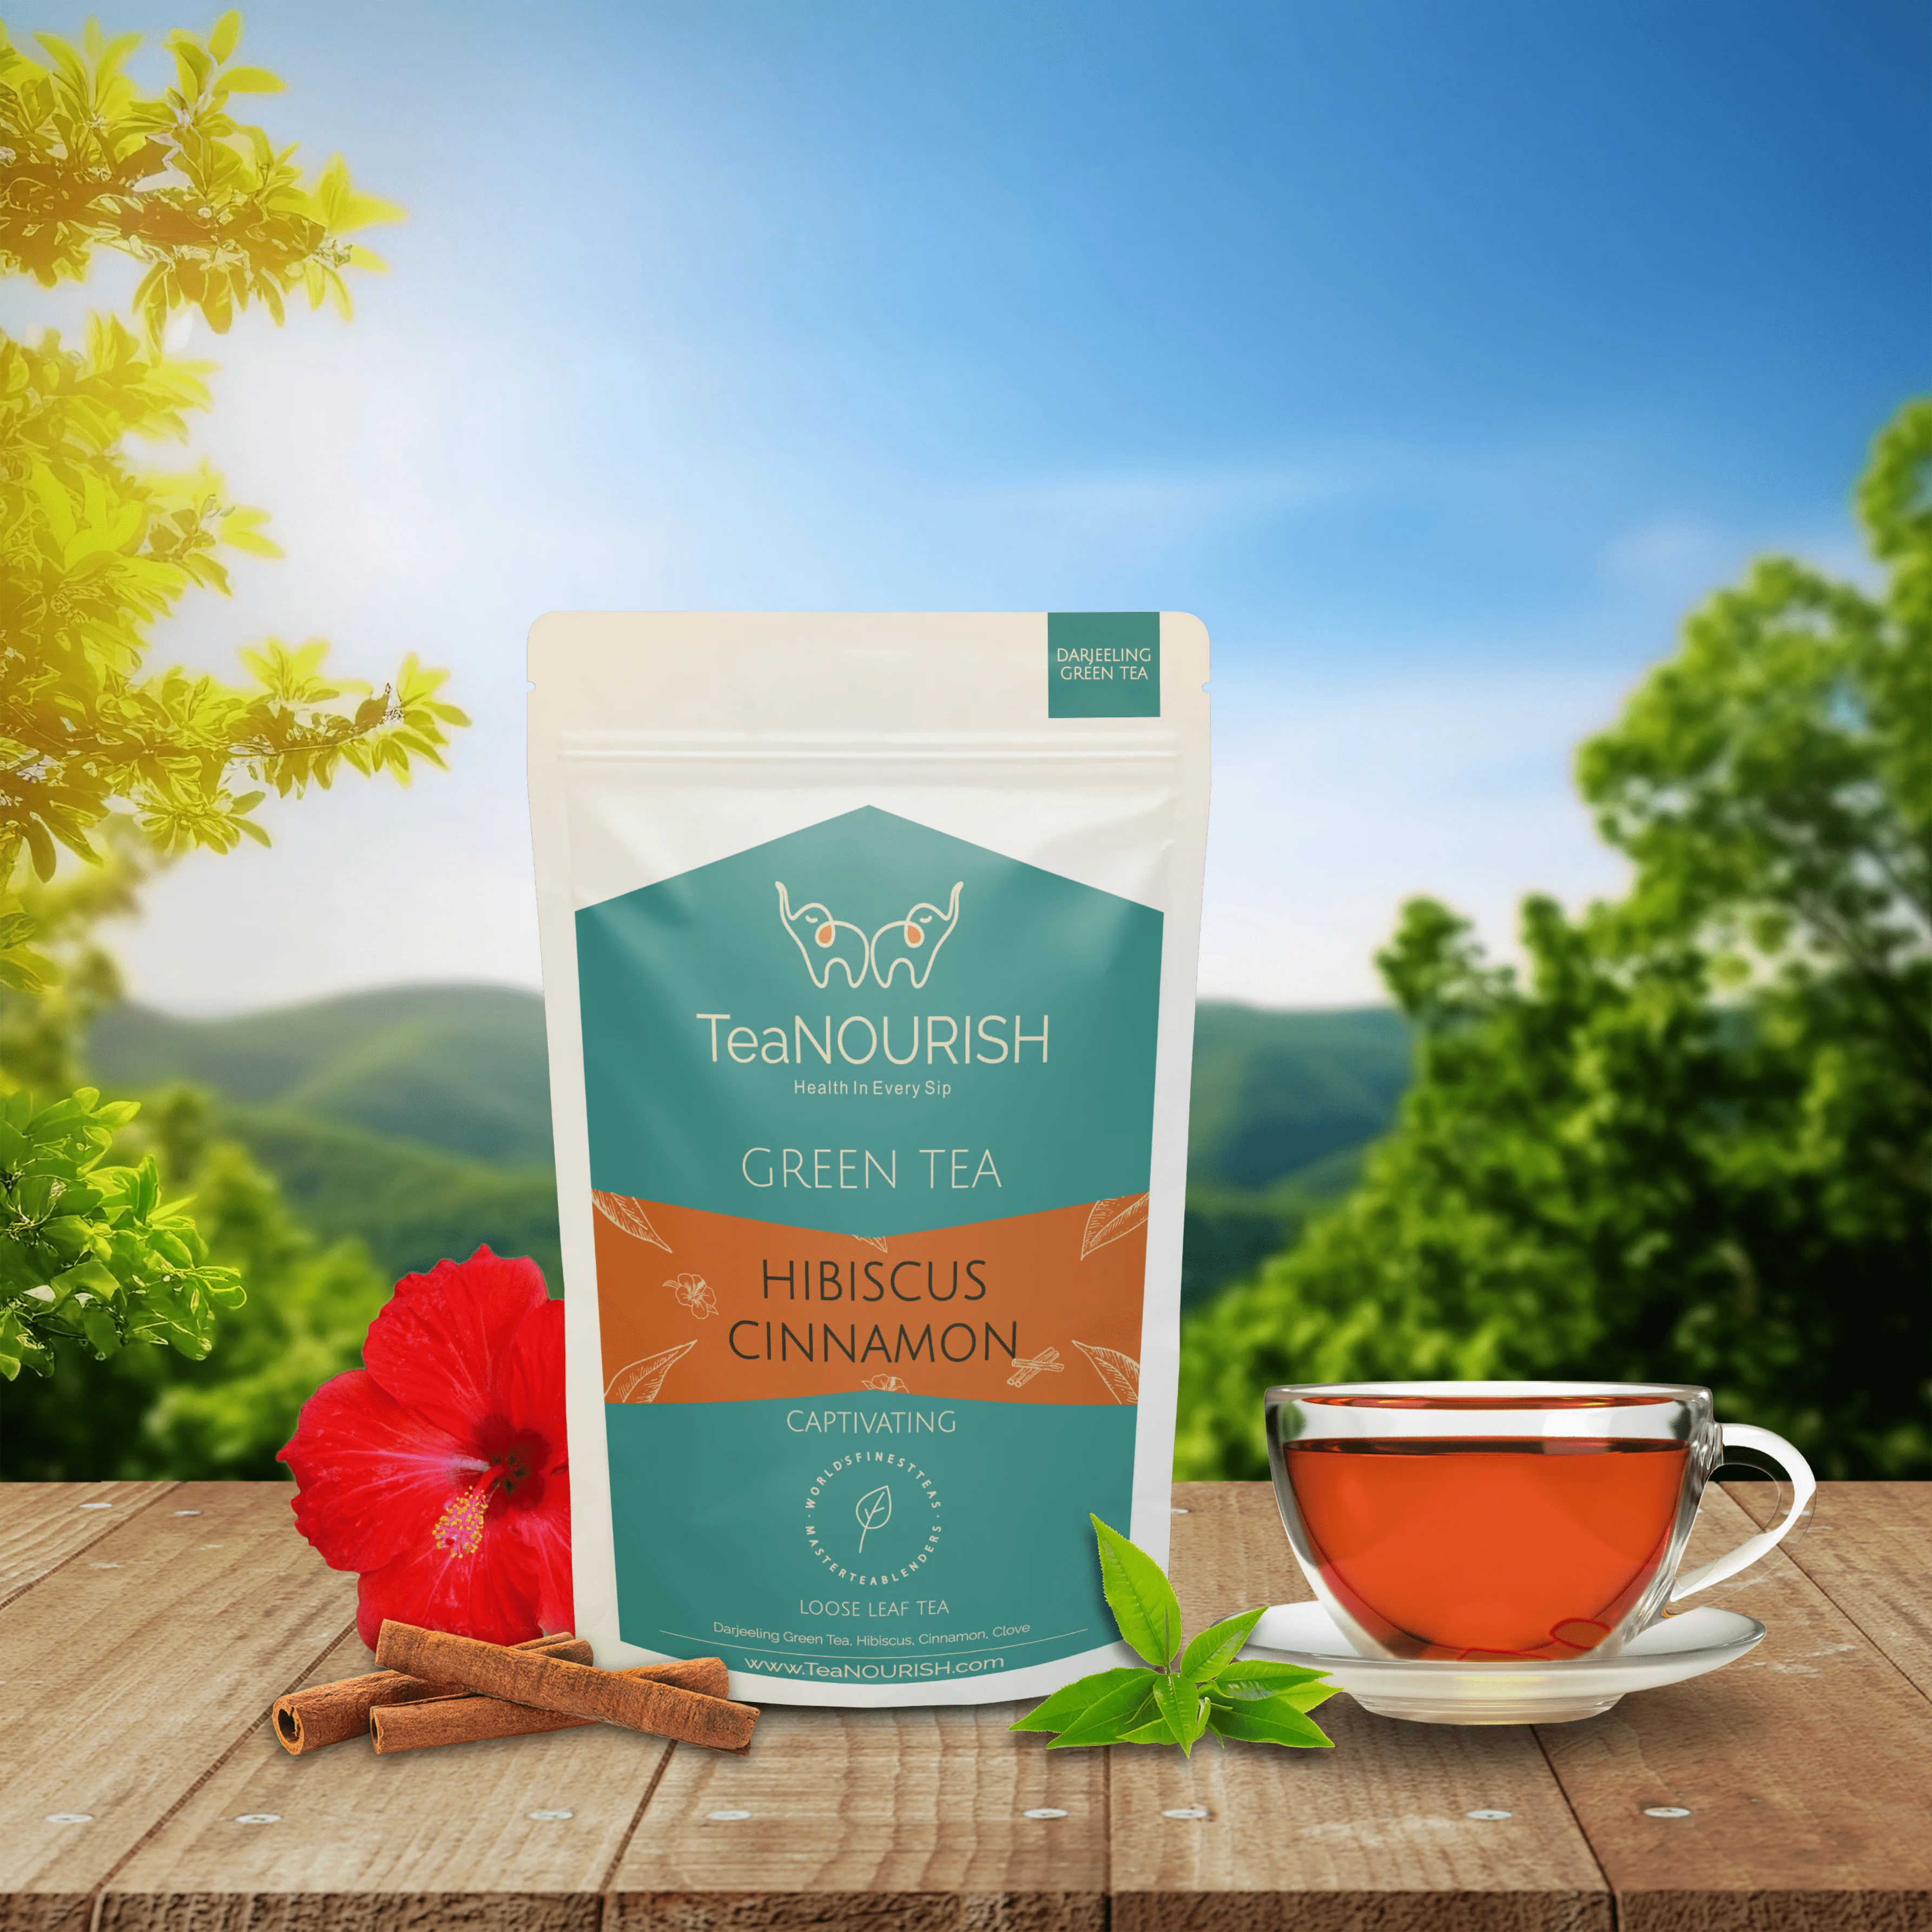 Hibiscus Cinnamon Green Tea Product Picture